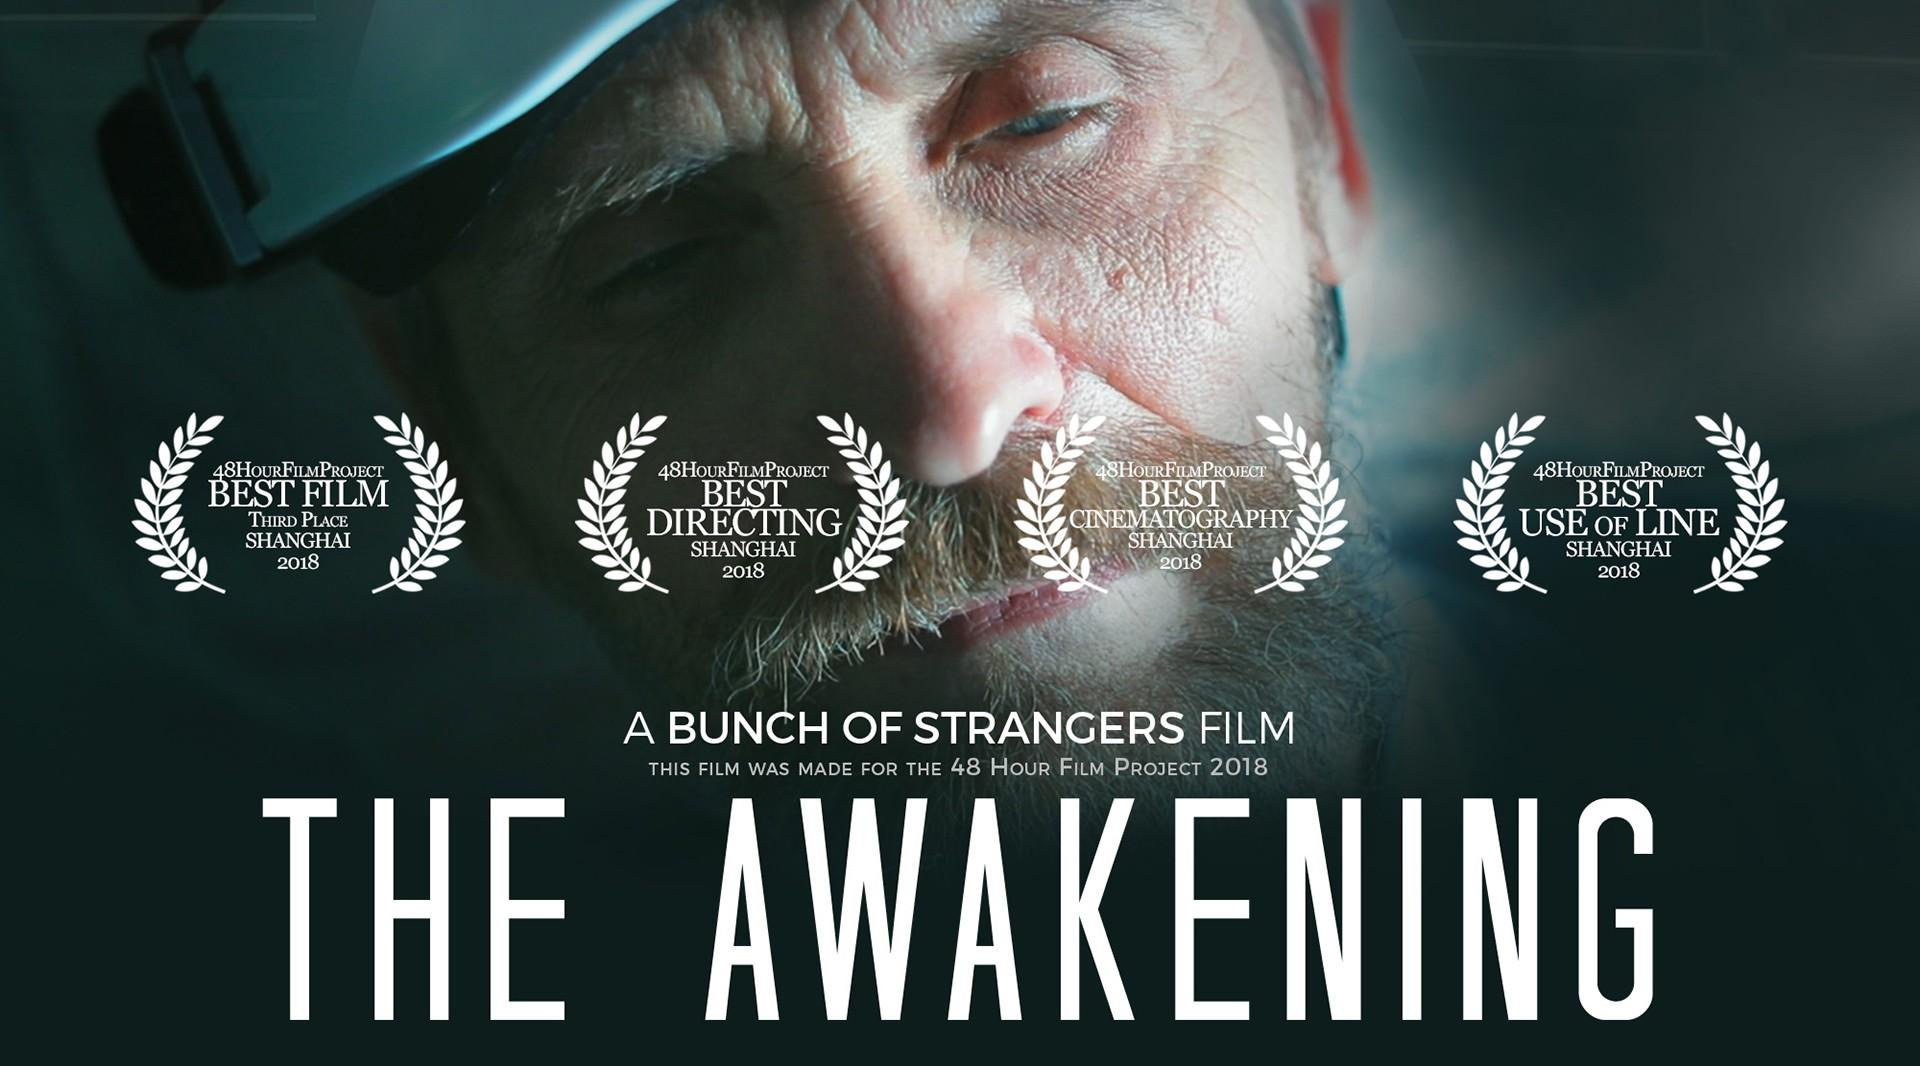 The AWAKENING Short Film